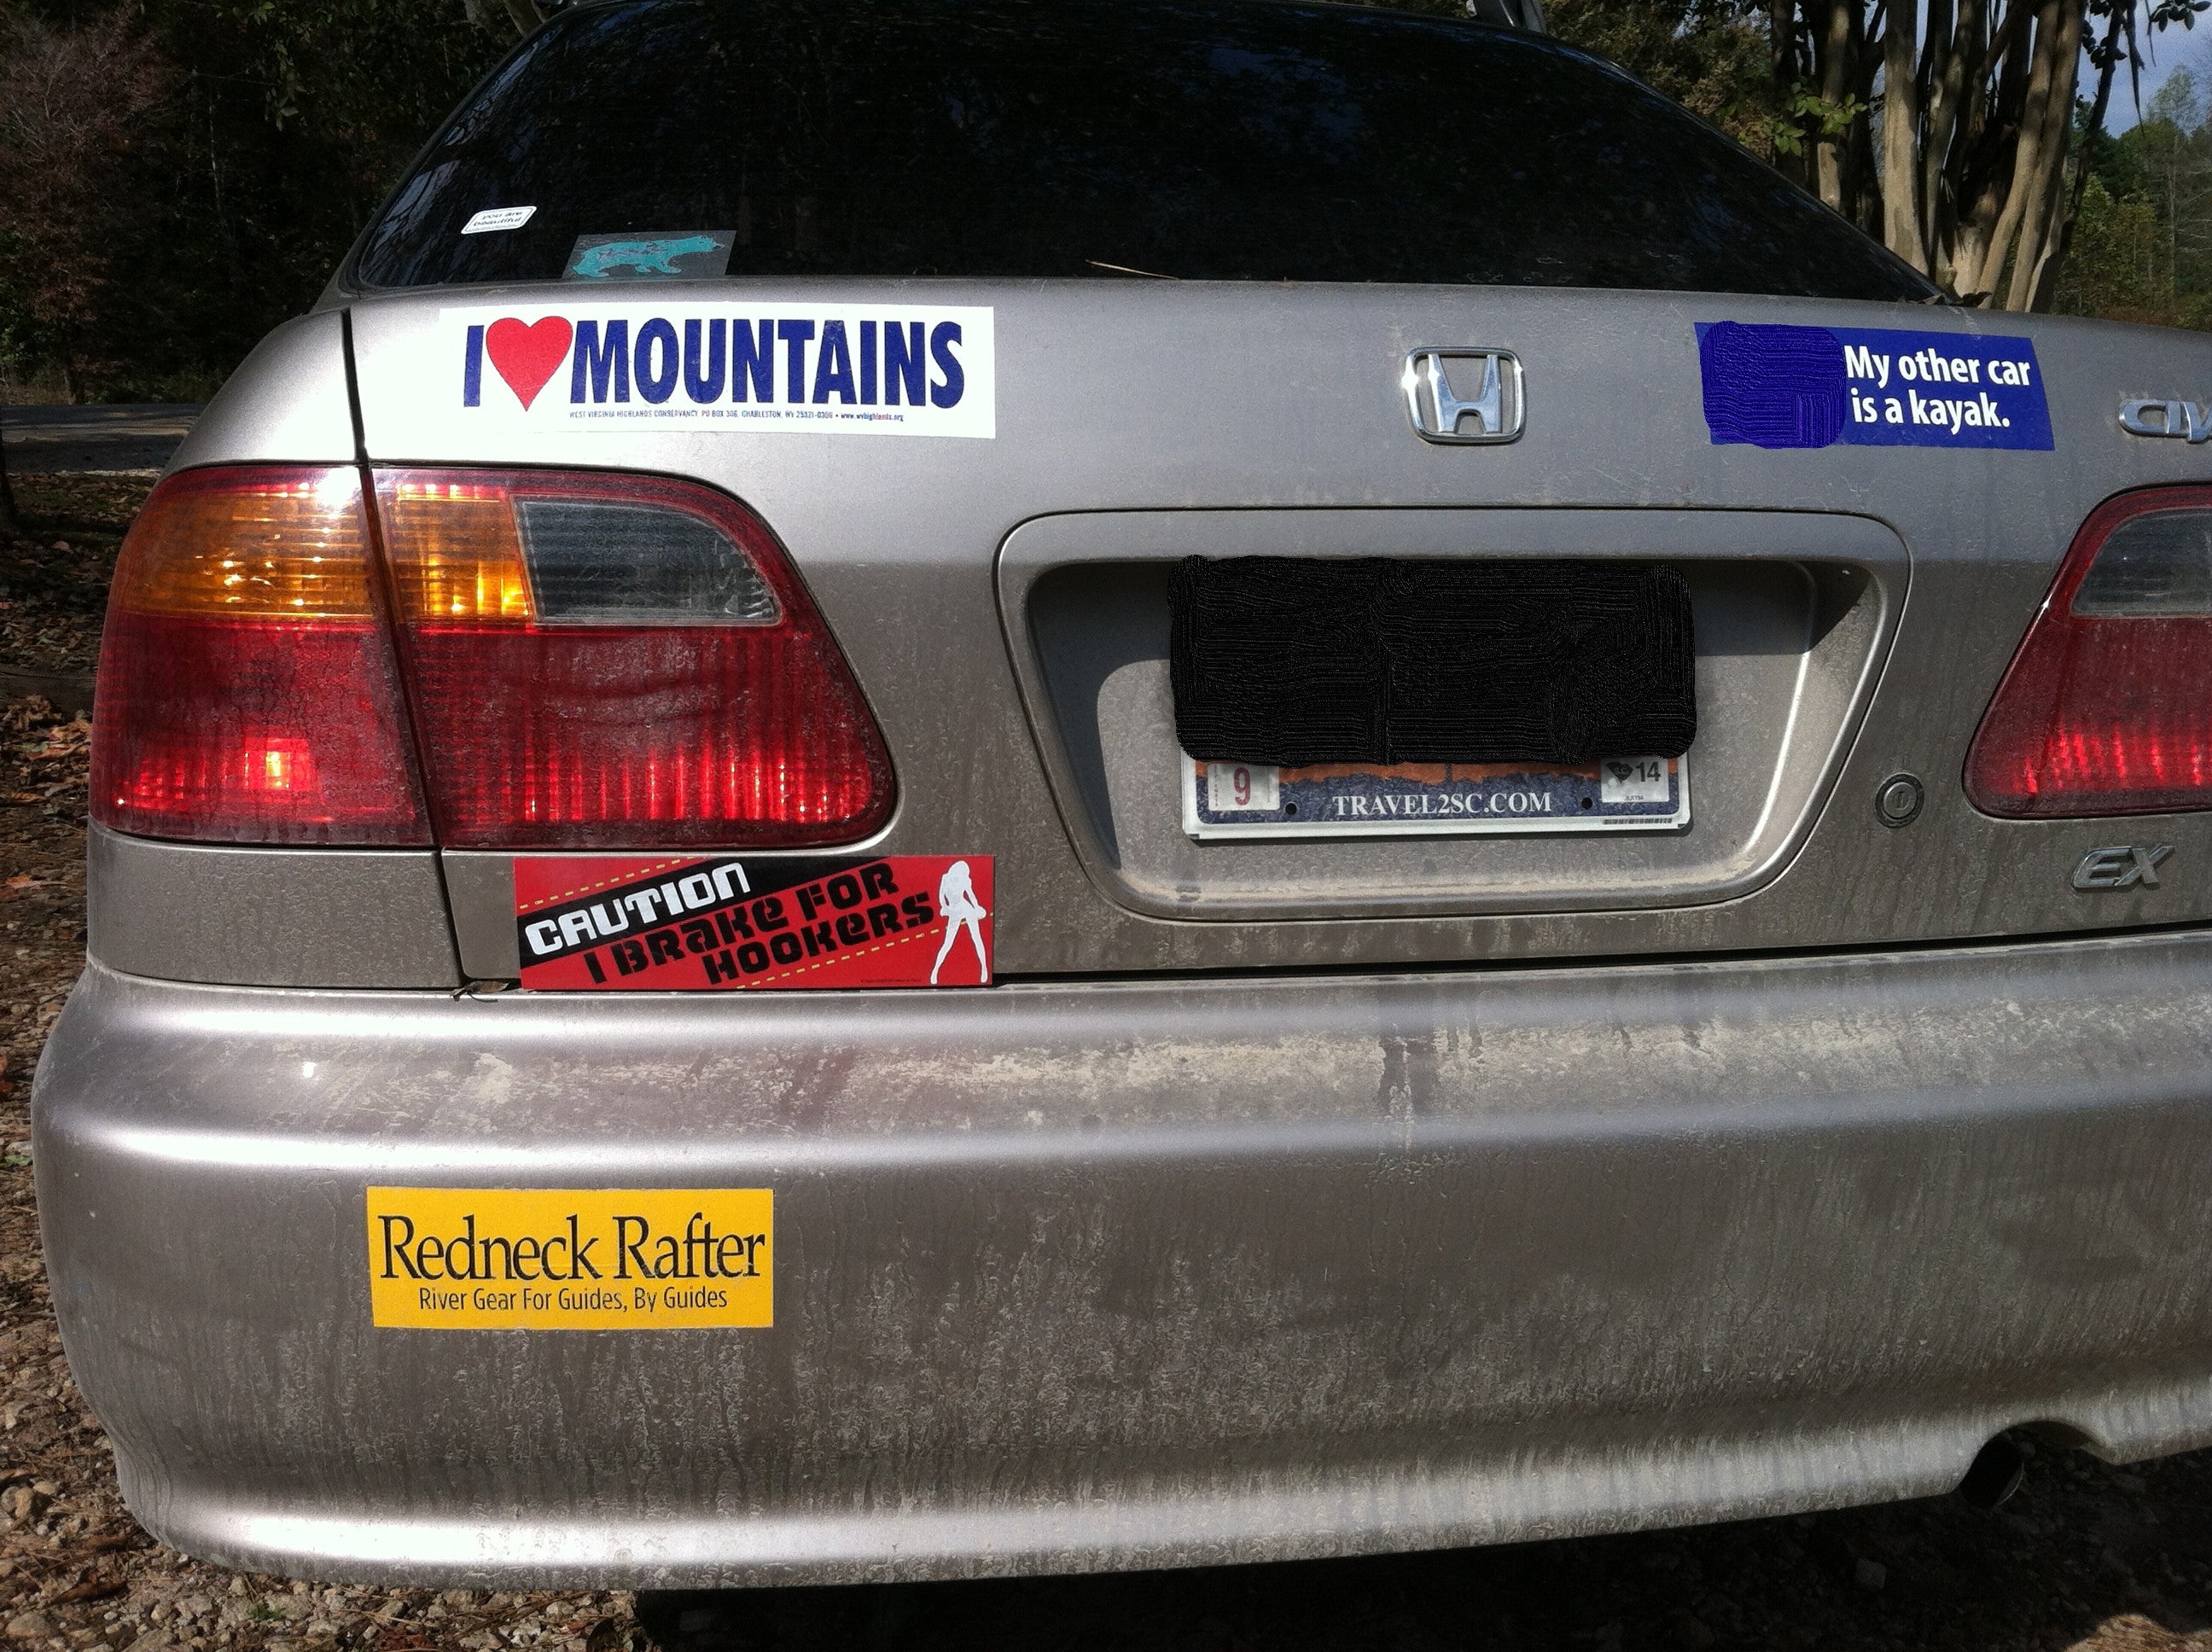 Redneck Rafter™ bumper sticker on car.